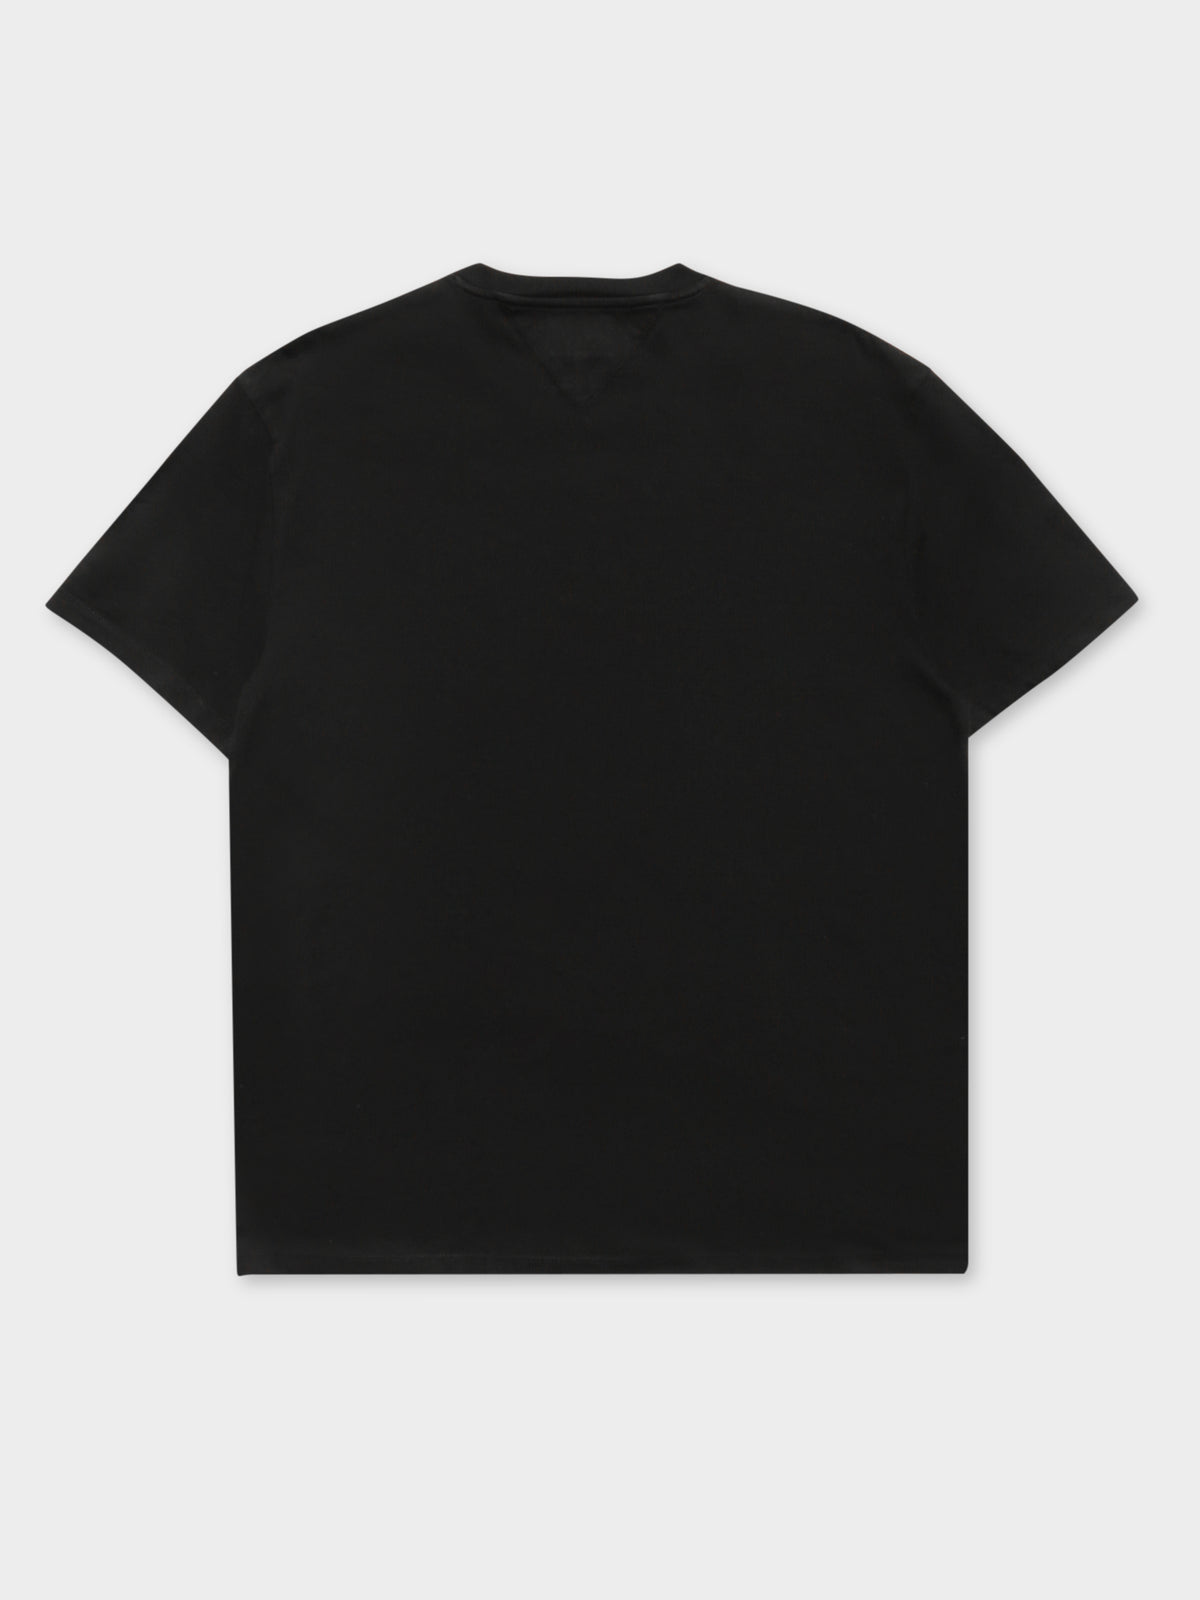 White Box Logo T-Shirt in Black